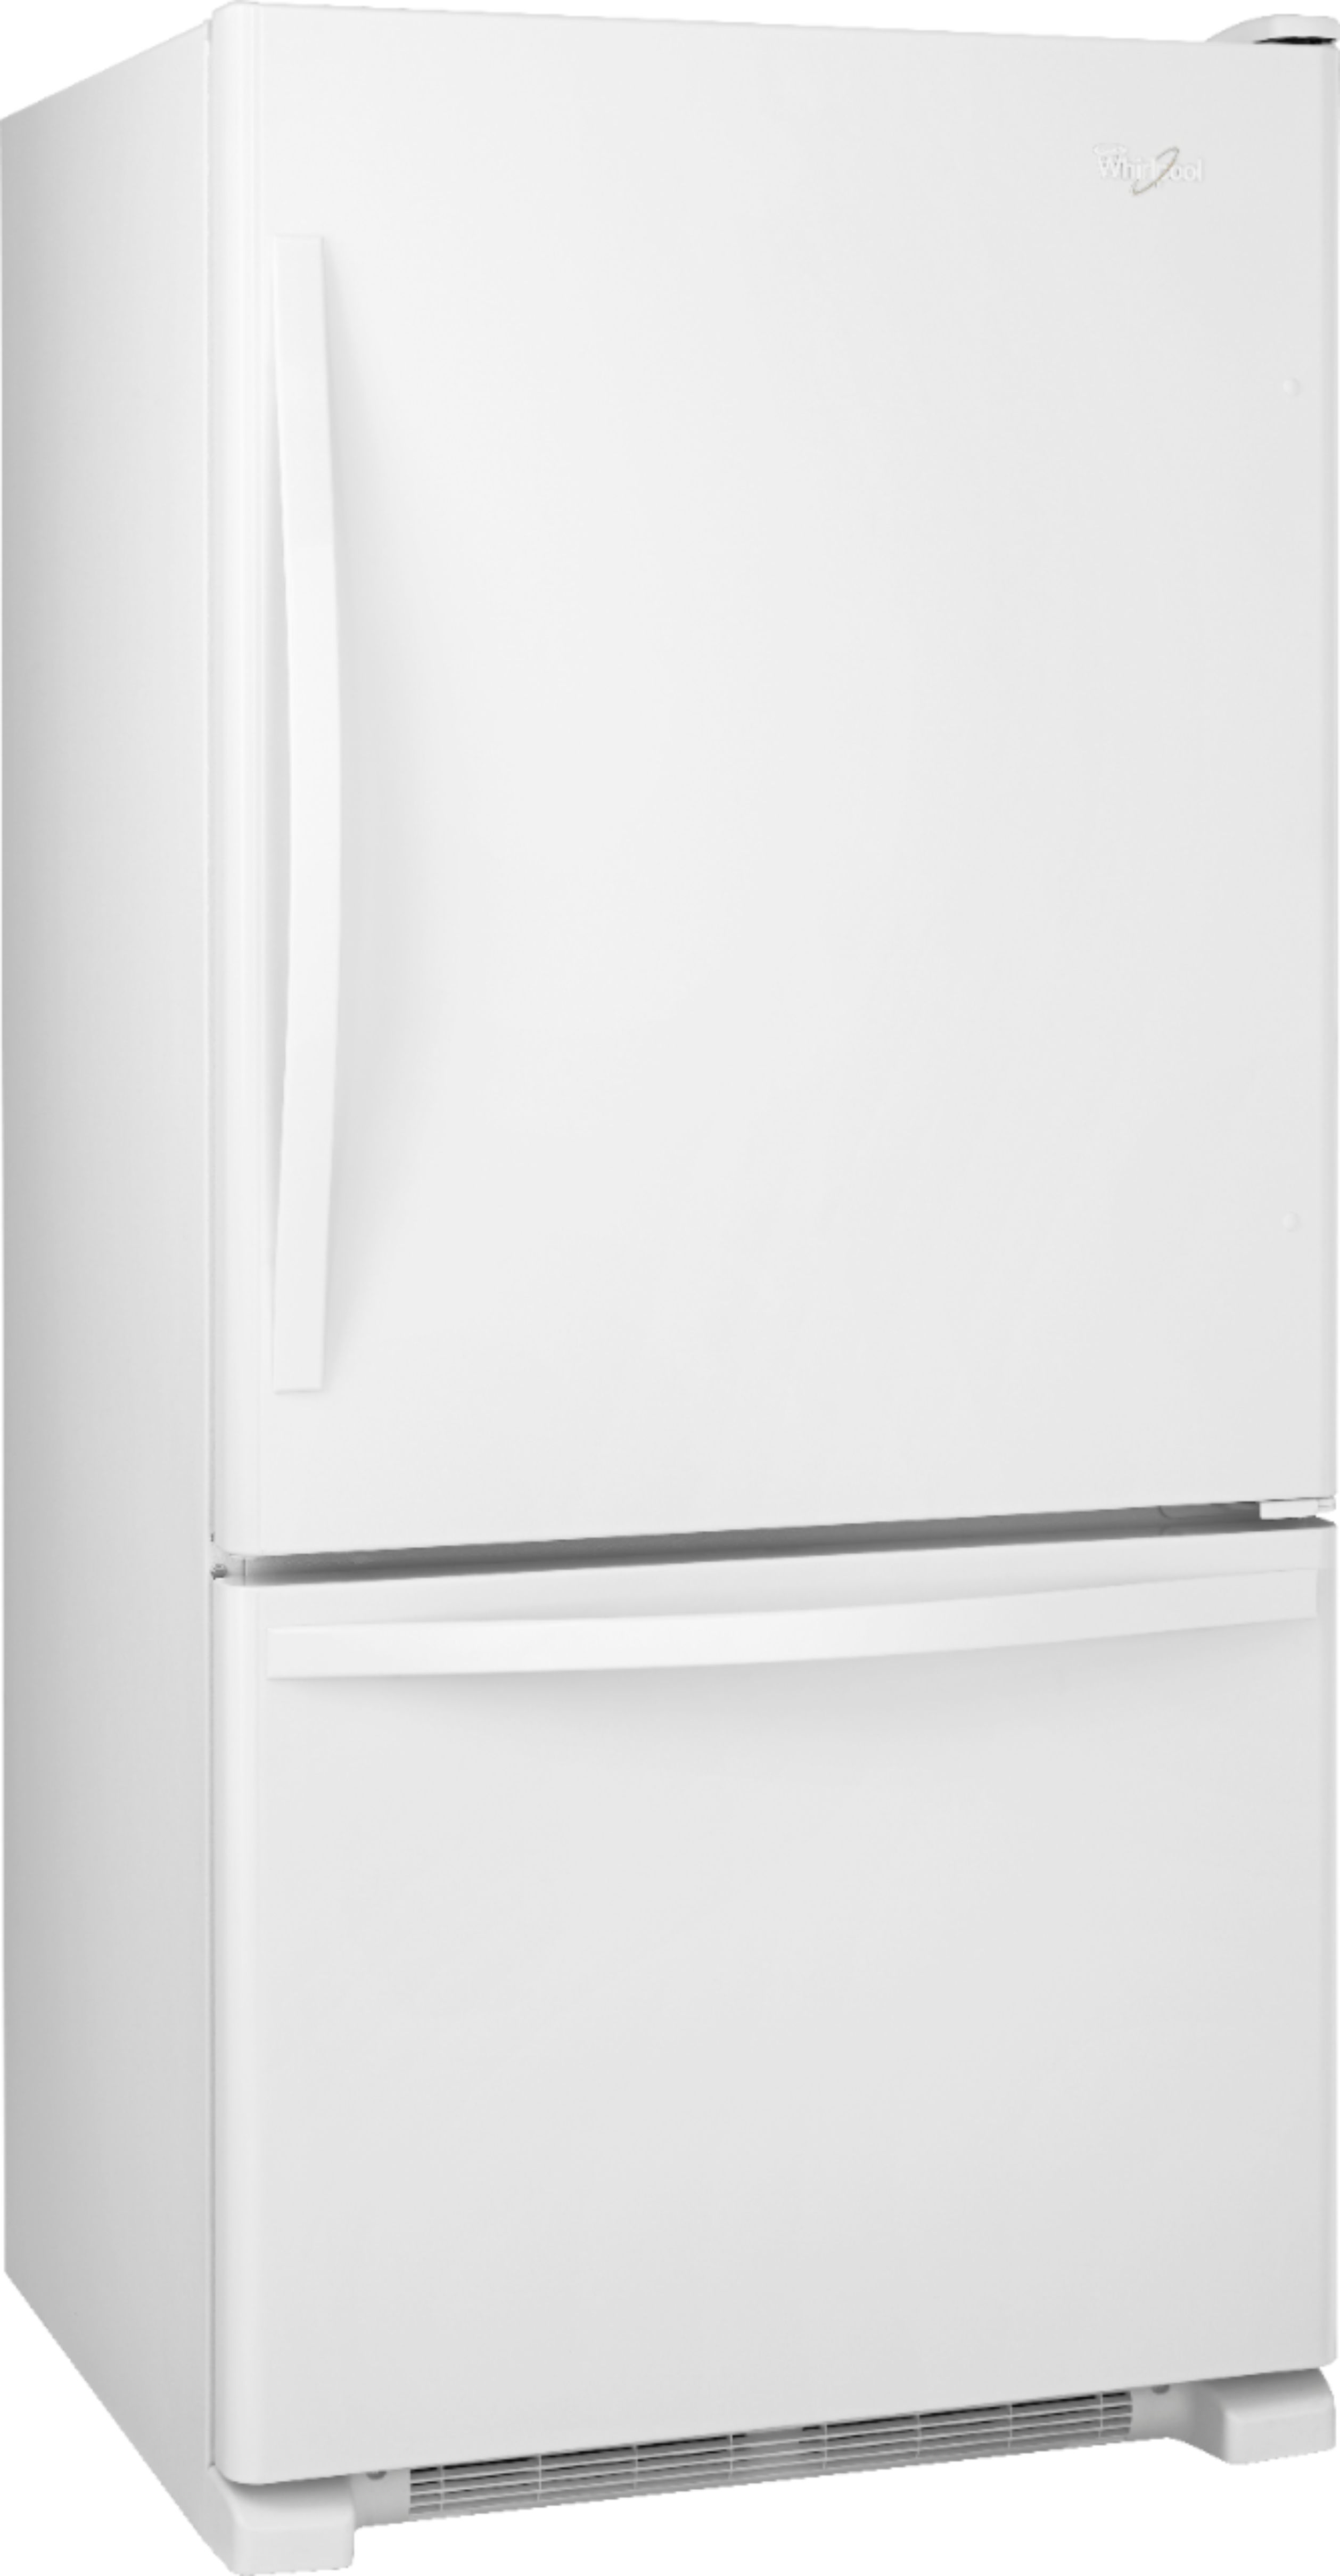 Angle View: Whirlpool - 18.5 Cu. Ft. Bottom-Freezer Refrigerator - White